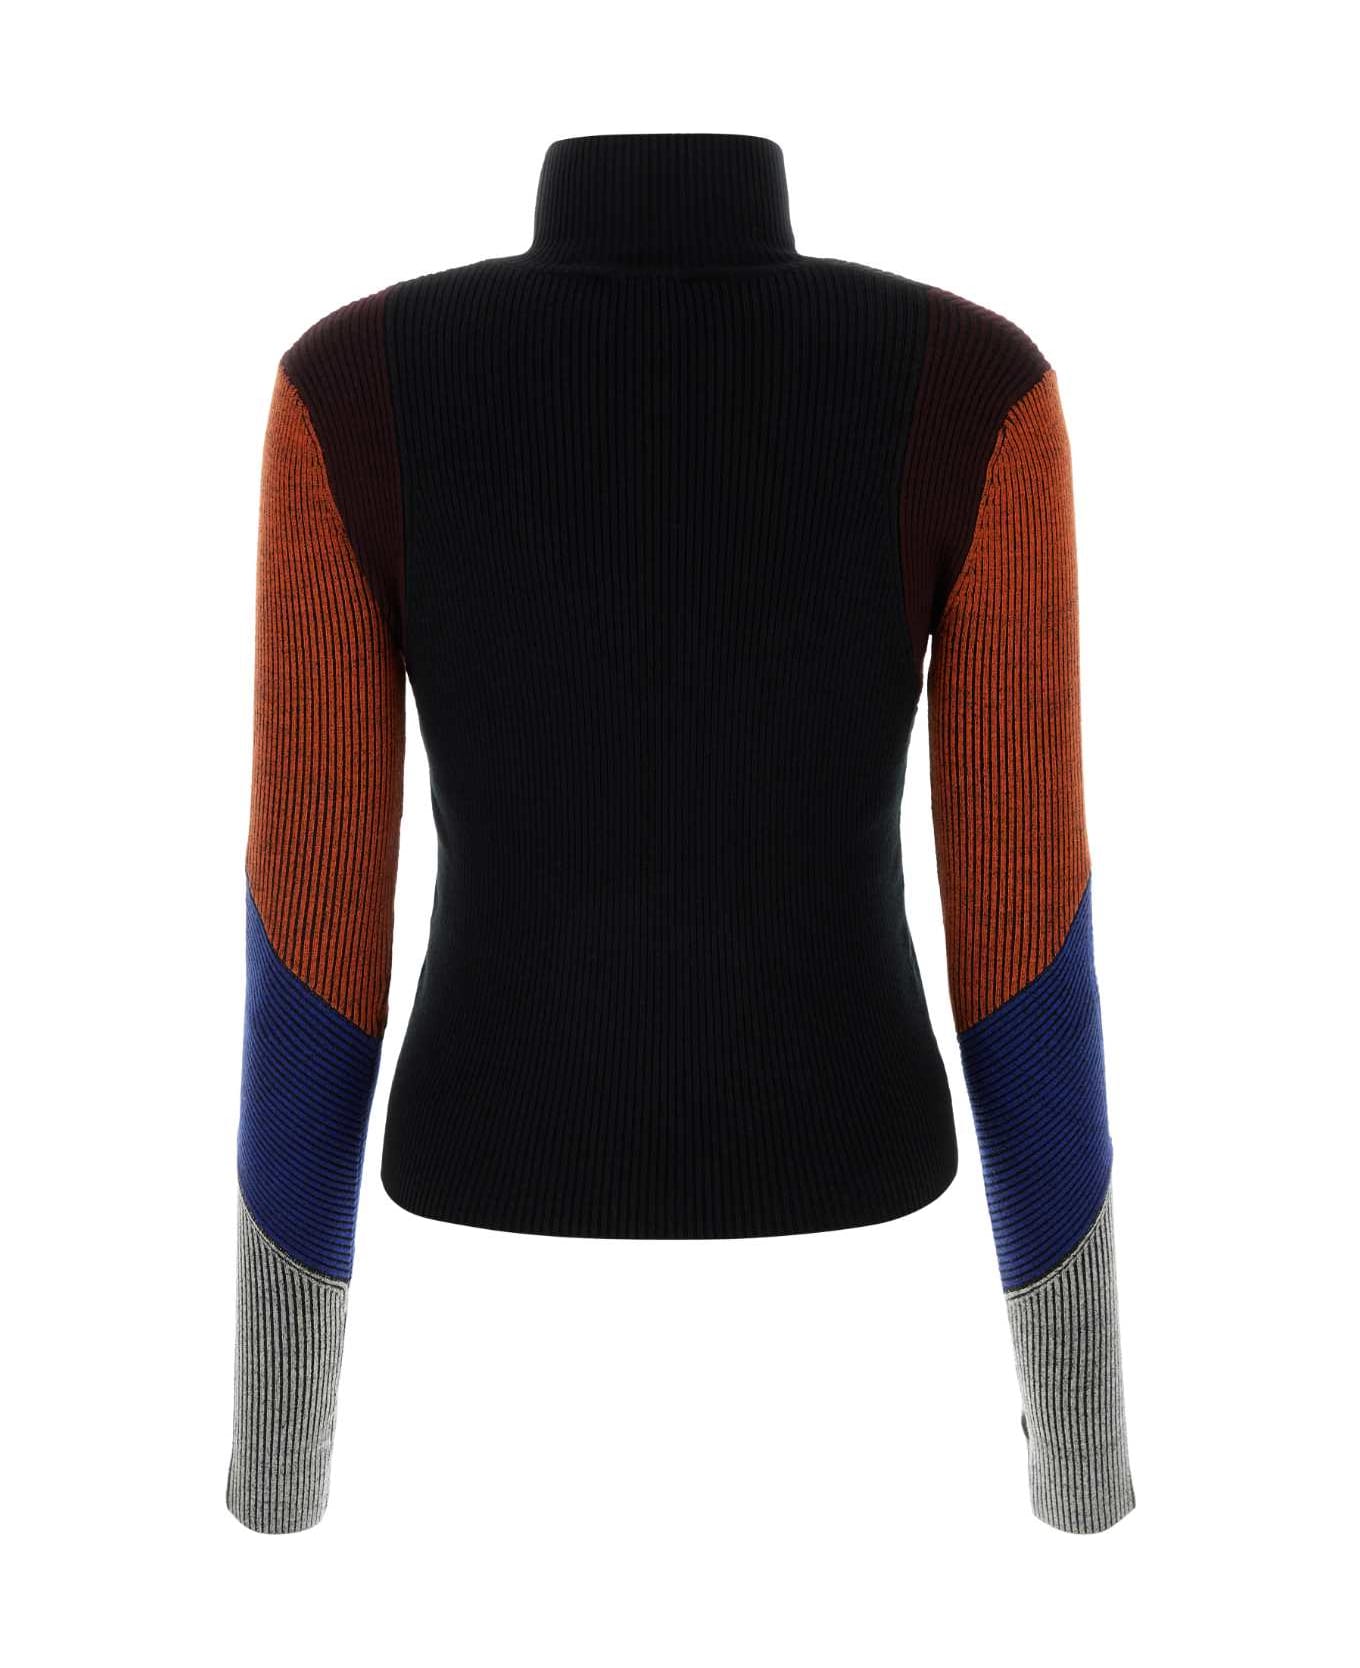 Chloé Black Stretch Wool Blend Sweater - MULTICOLOR1